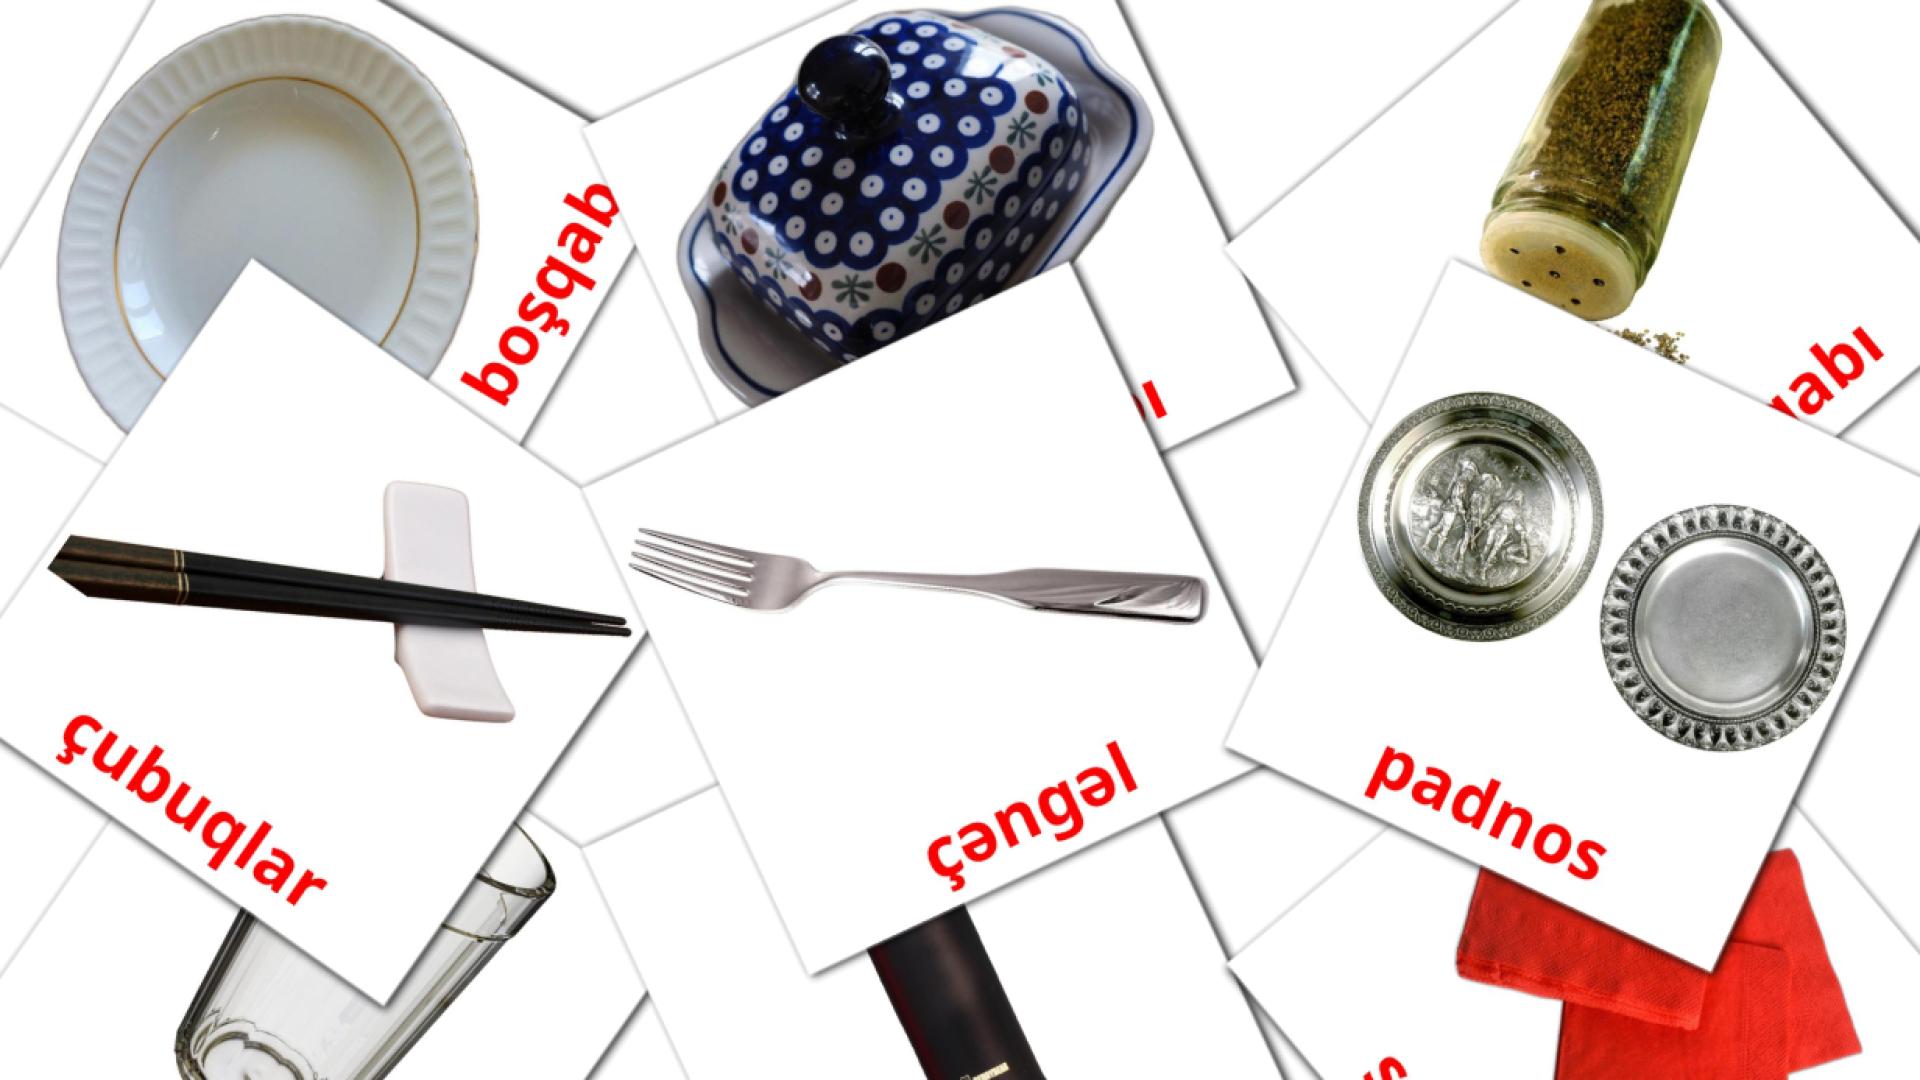 Crockery and cutlery - azerbaijani vocabulary cards